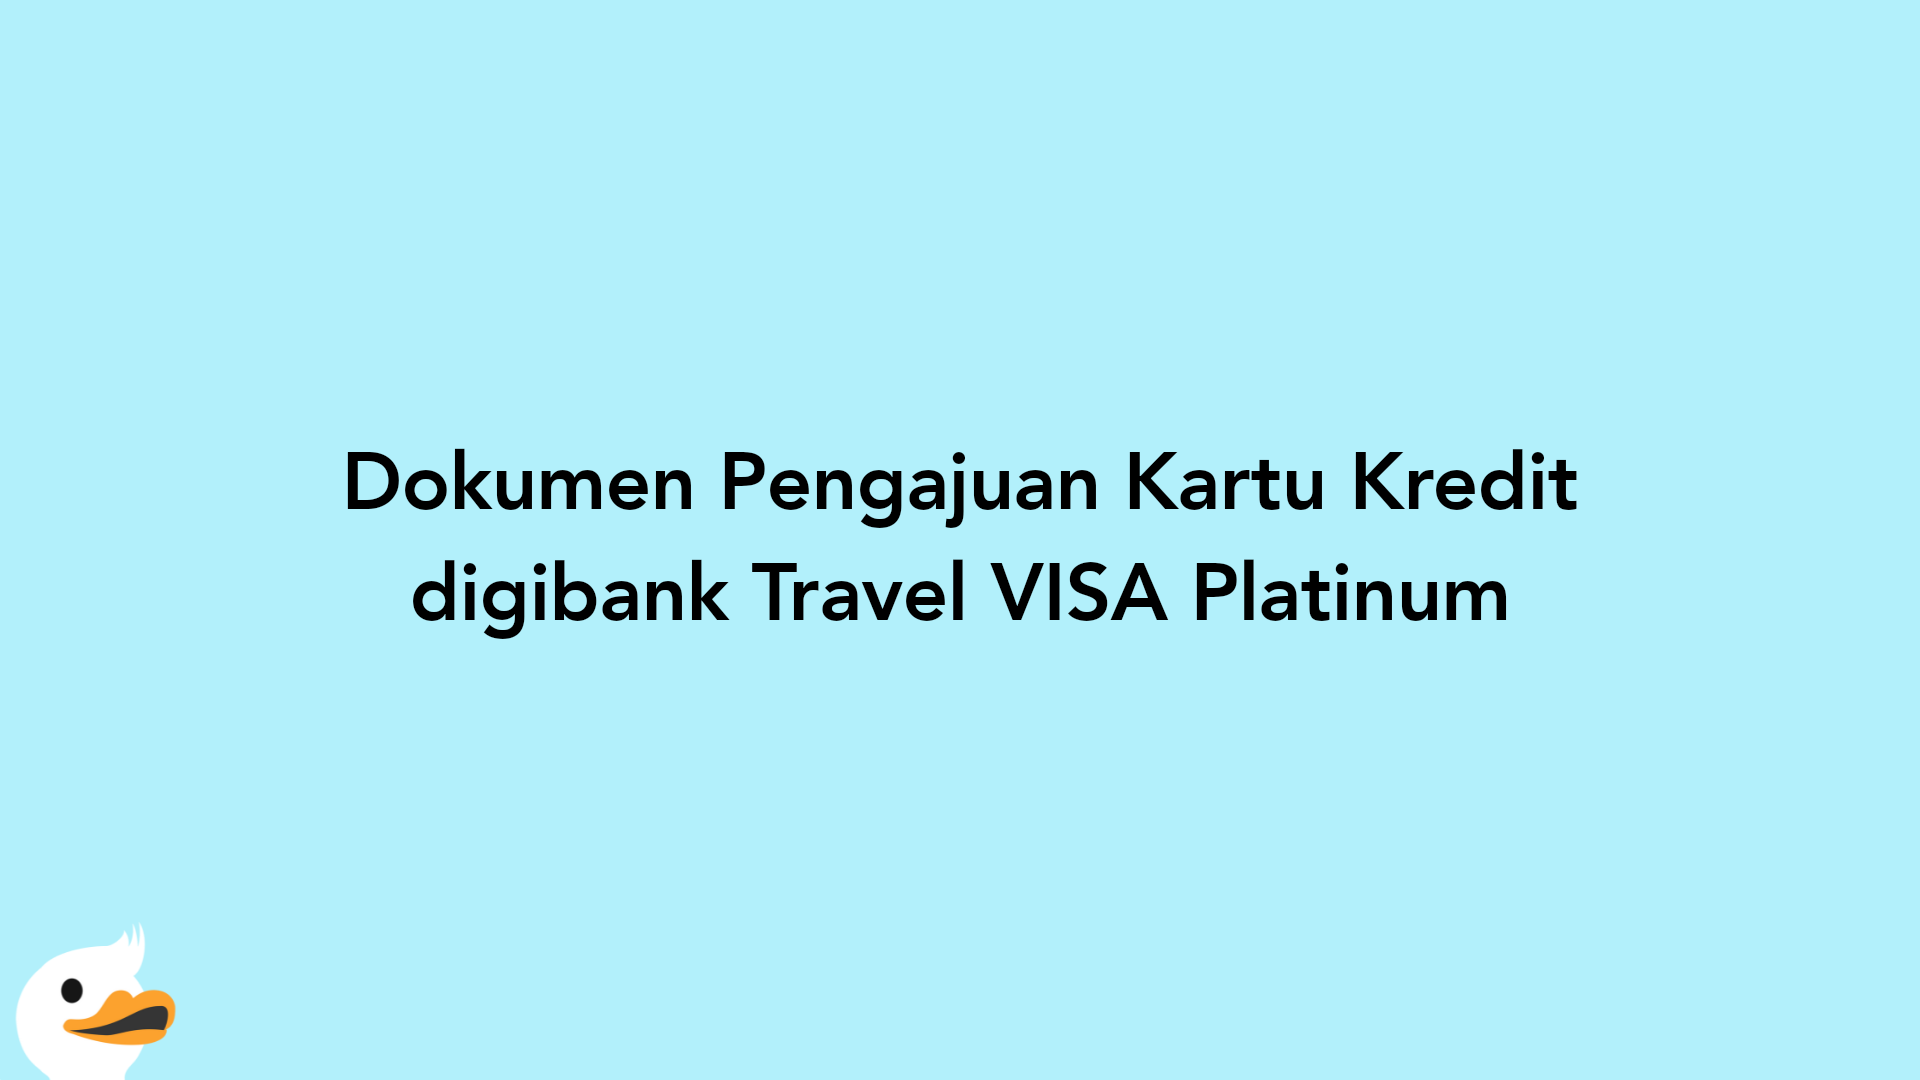 Dokumen Pengajuan Kartu Kredit digibank Travel VISA Platinum